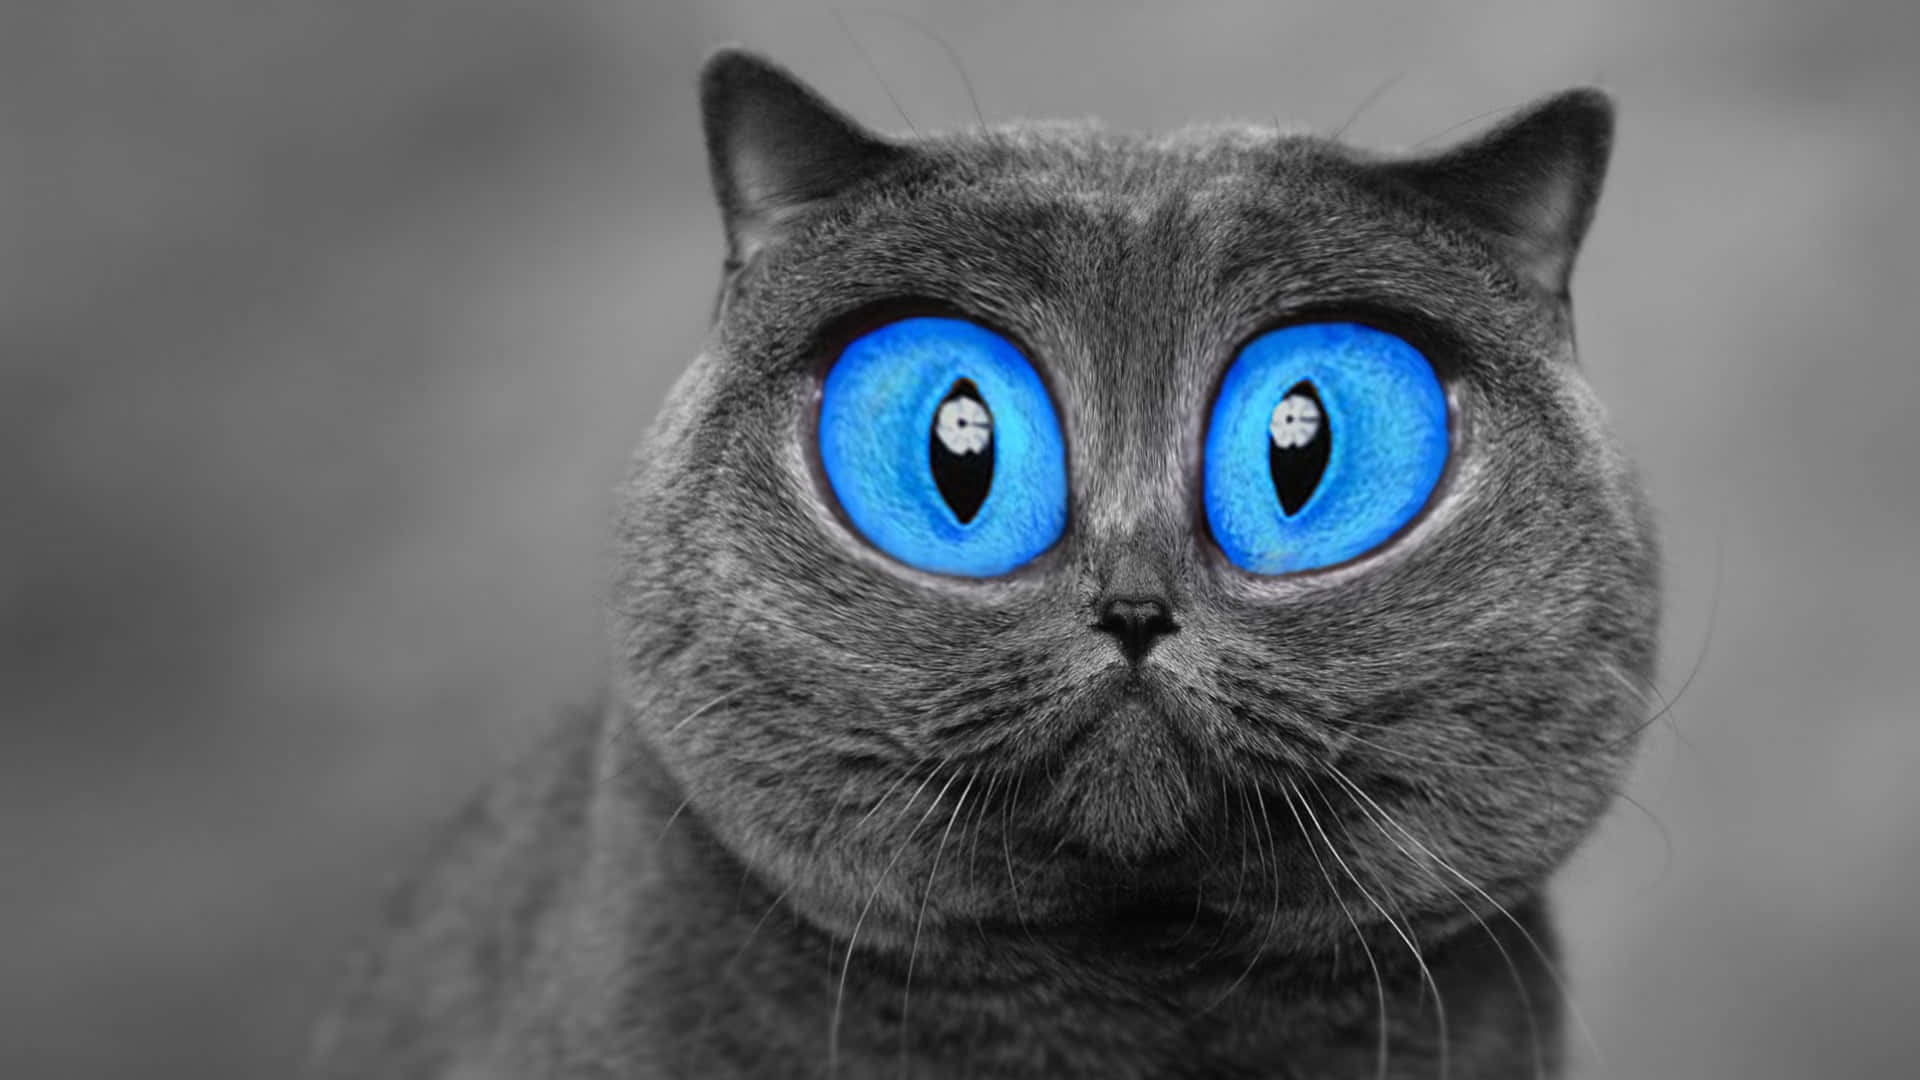 Caption: Dazzling Blue Cat Eyes Of A British Shorthair Background